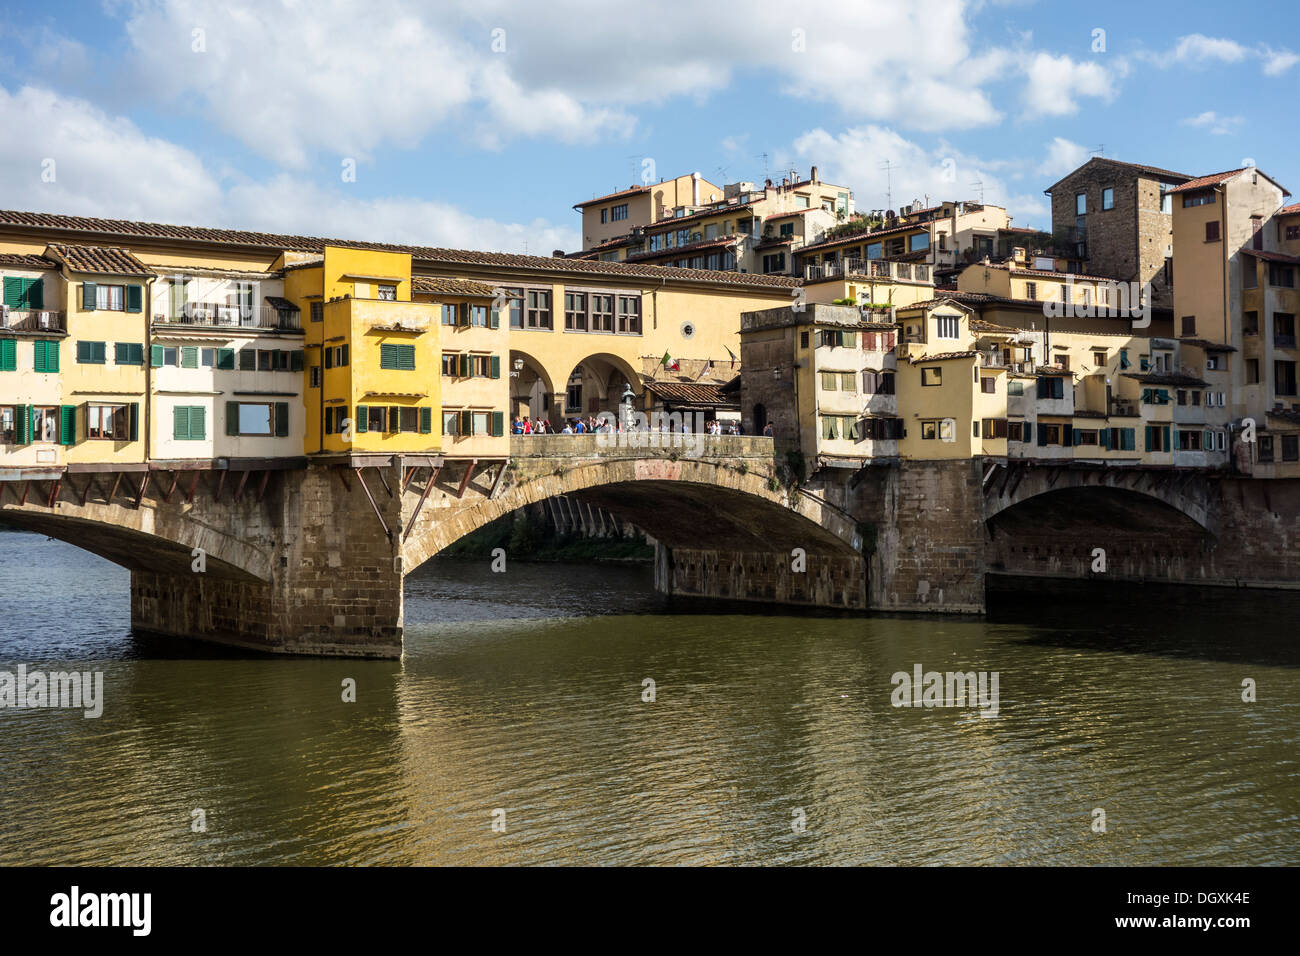 Ponte Vecchio (Old Bridge) in Florence,Italy Stock Photo